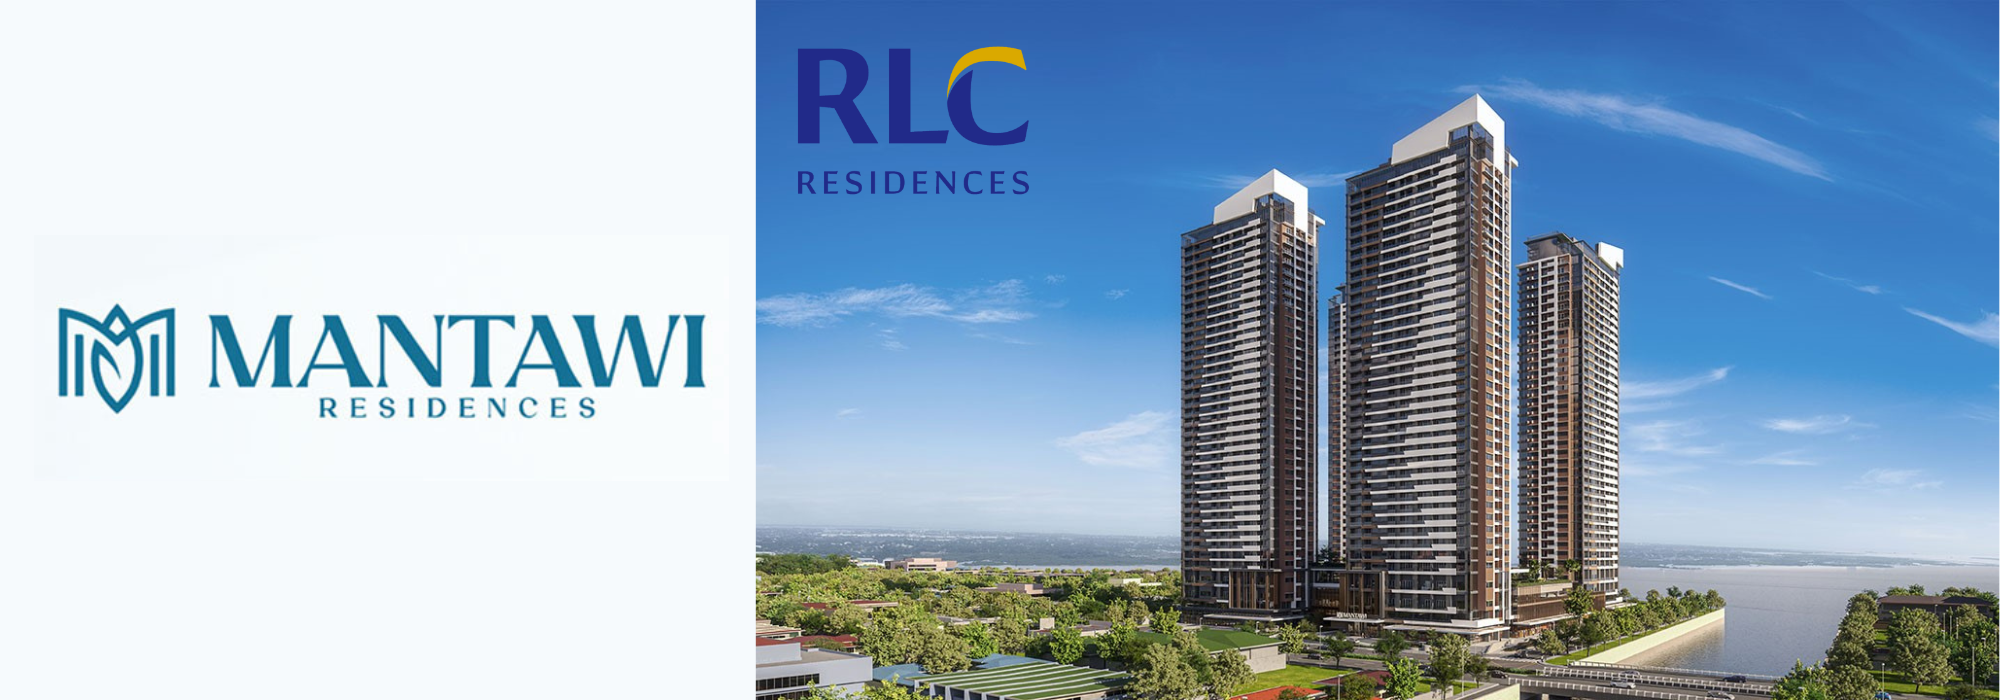 Mantawi Residences - RLC Residences